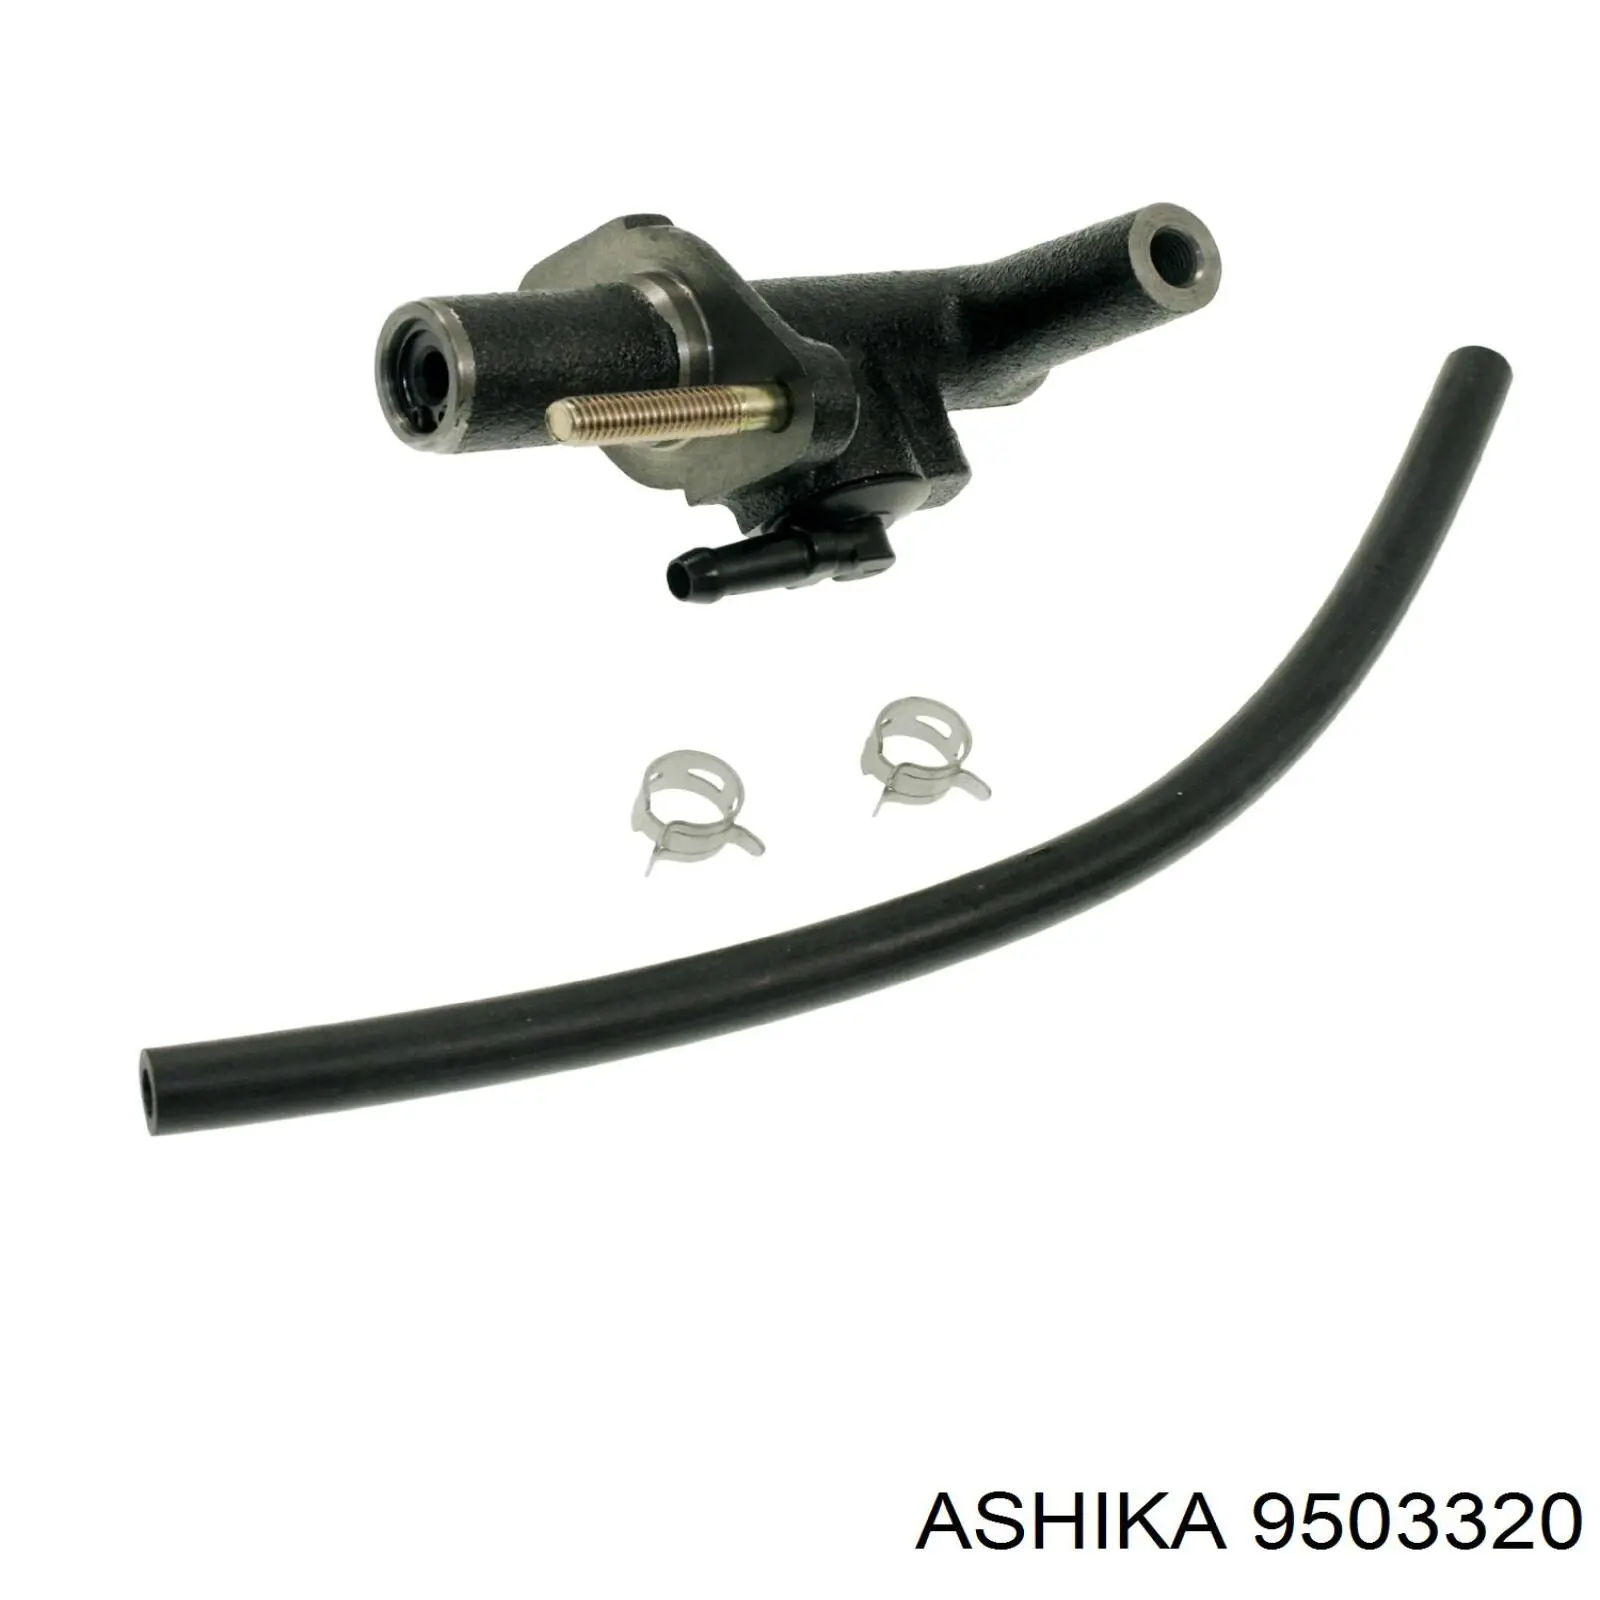 95-03-320 Ashika cilindro maestro de embrague